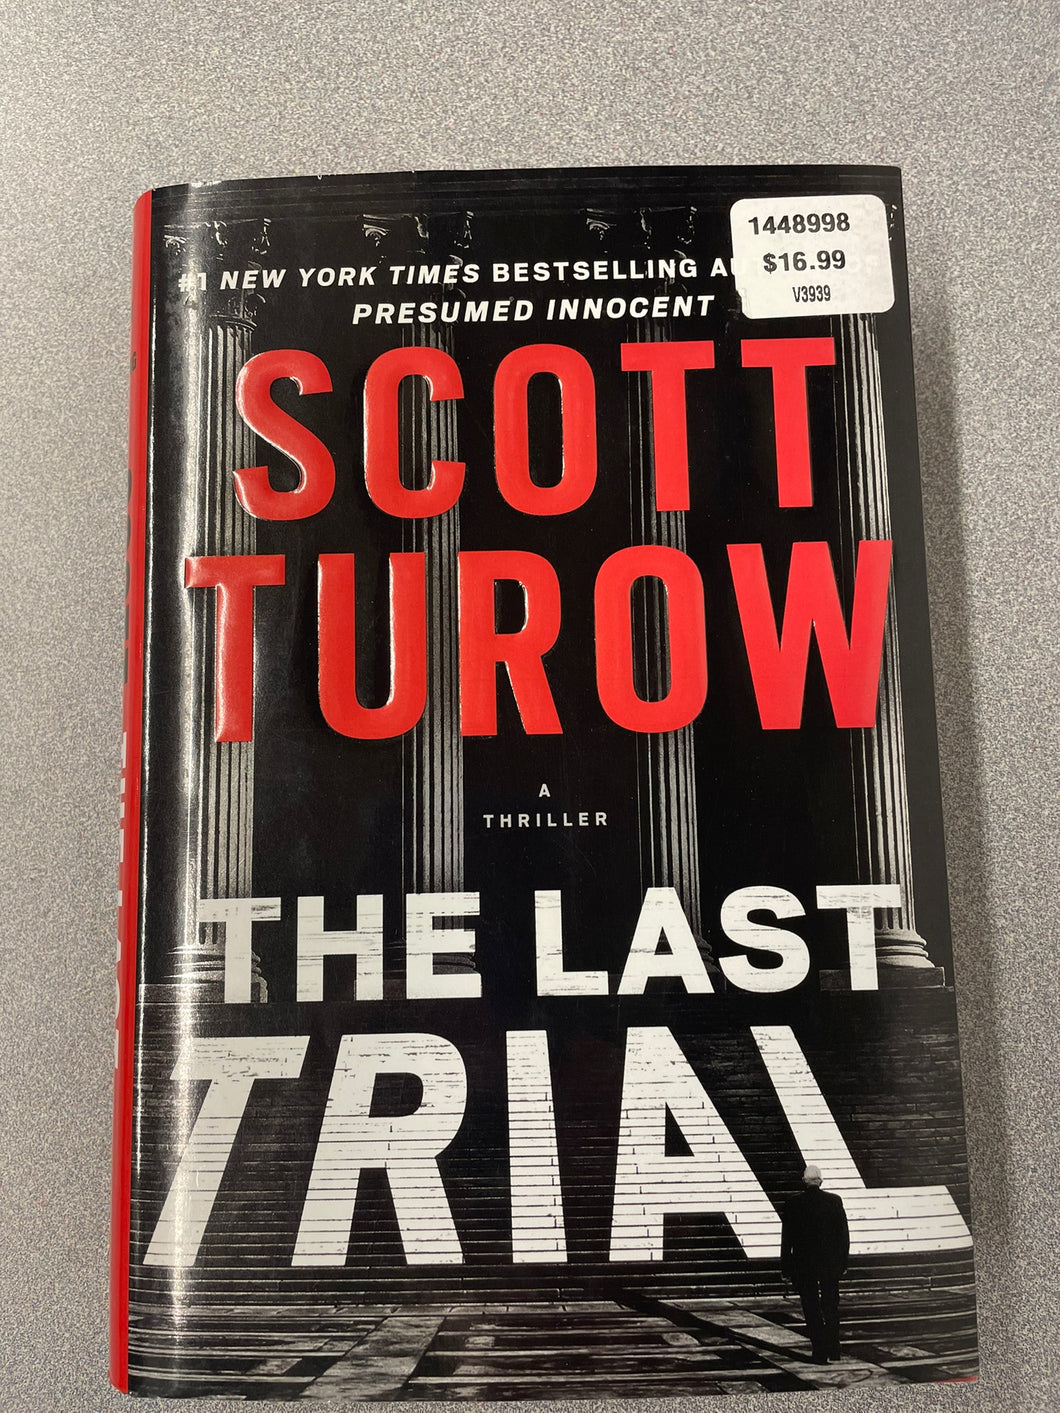 Turow, Scott, The Last Trial [2020] MY 6/23